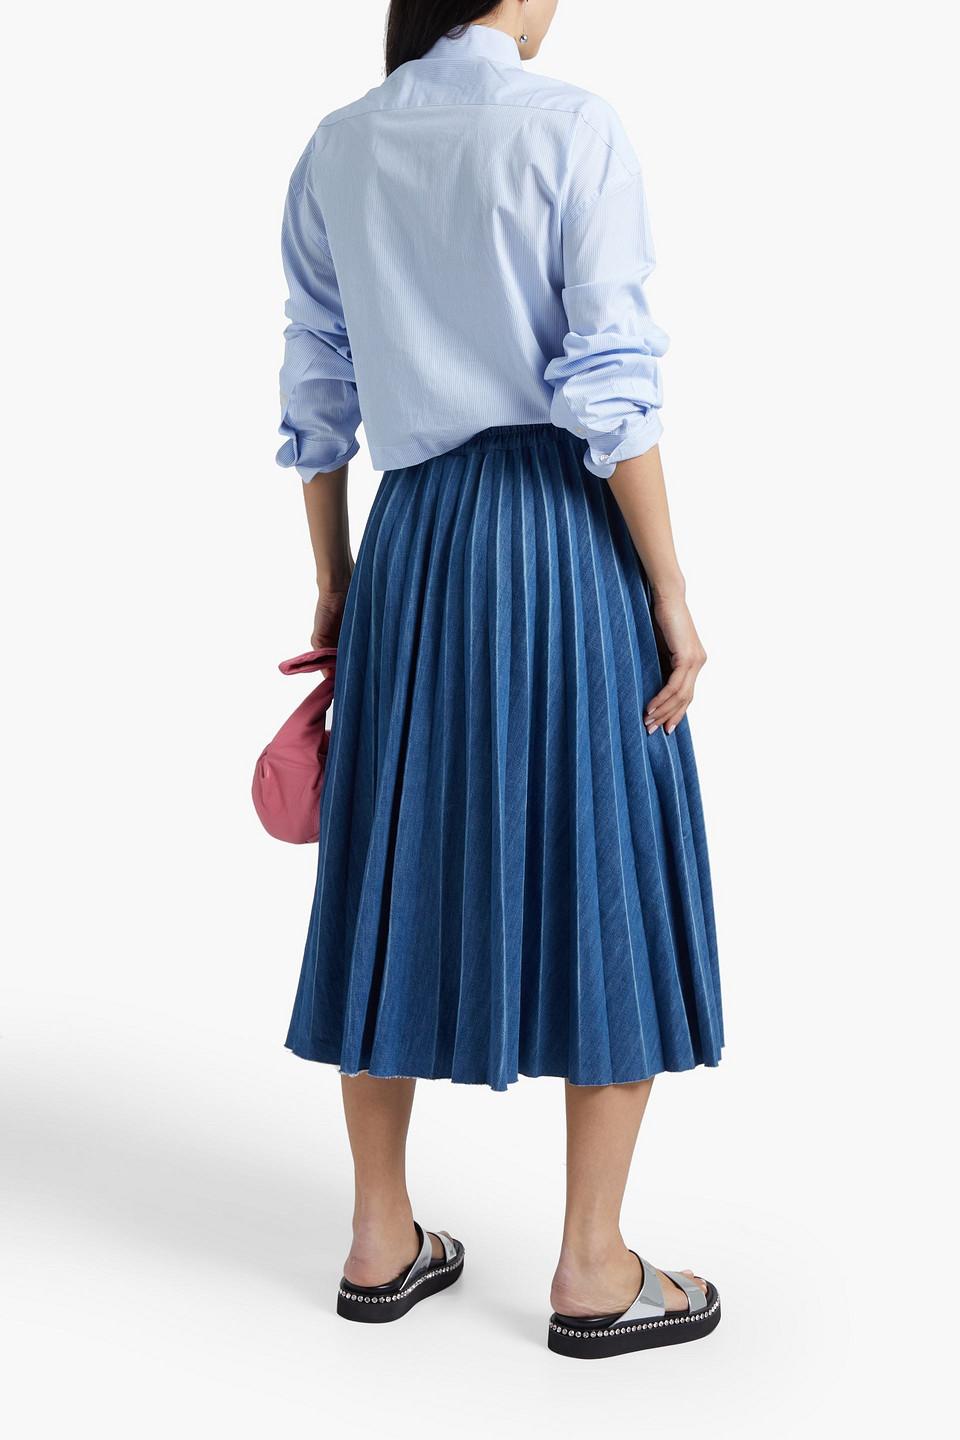 RED Valentino Pleated Denim Midi Skirt in Blue | Lyst